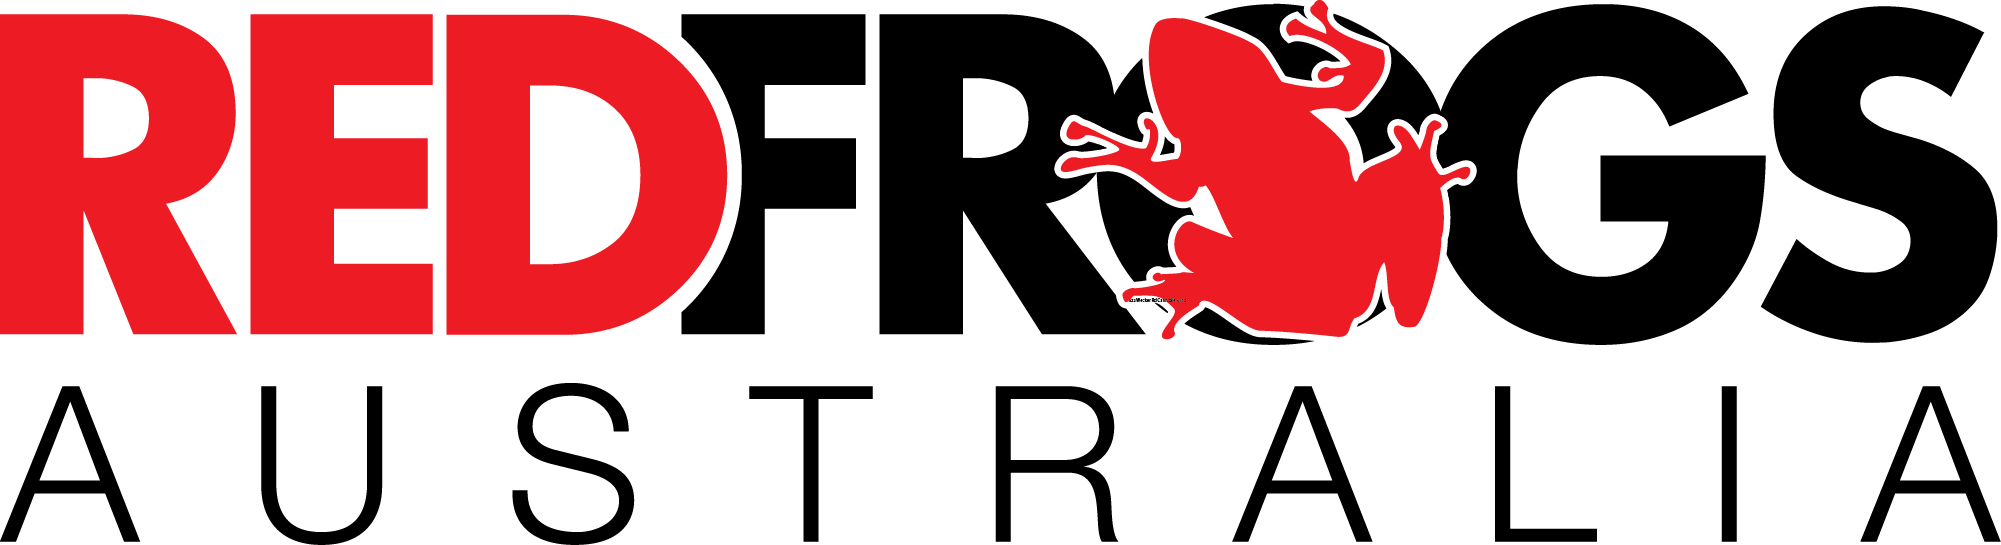 Universal Store - Red Frogs Australia Logo (2001x545)